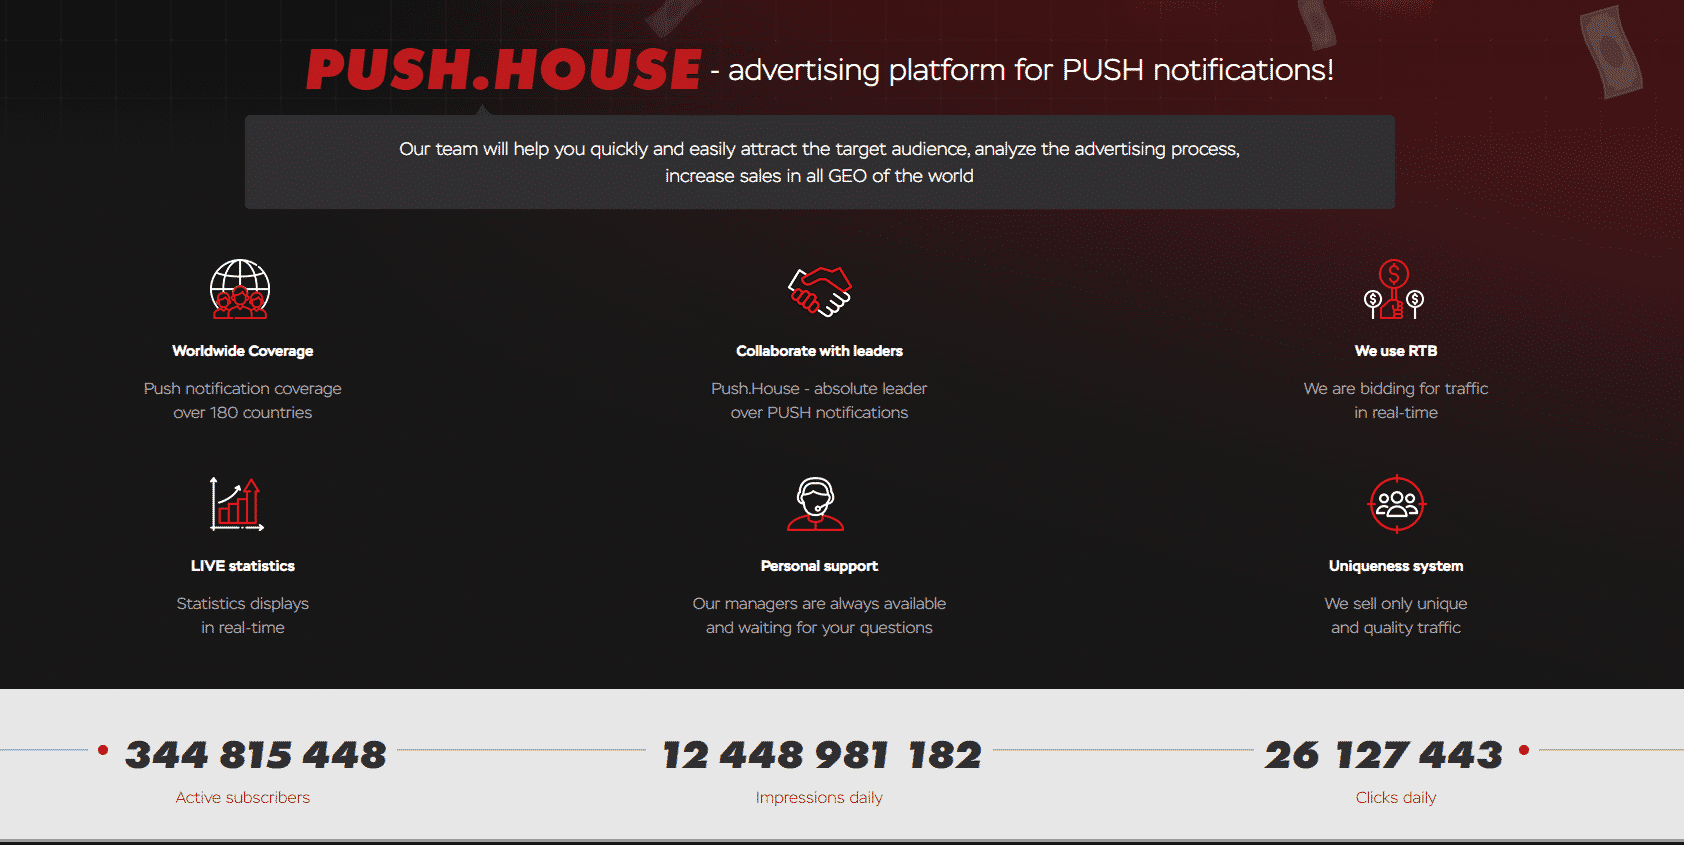 Push House advertising platform for PUSH notifications